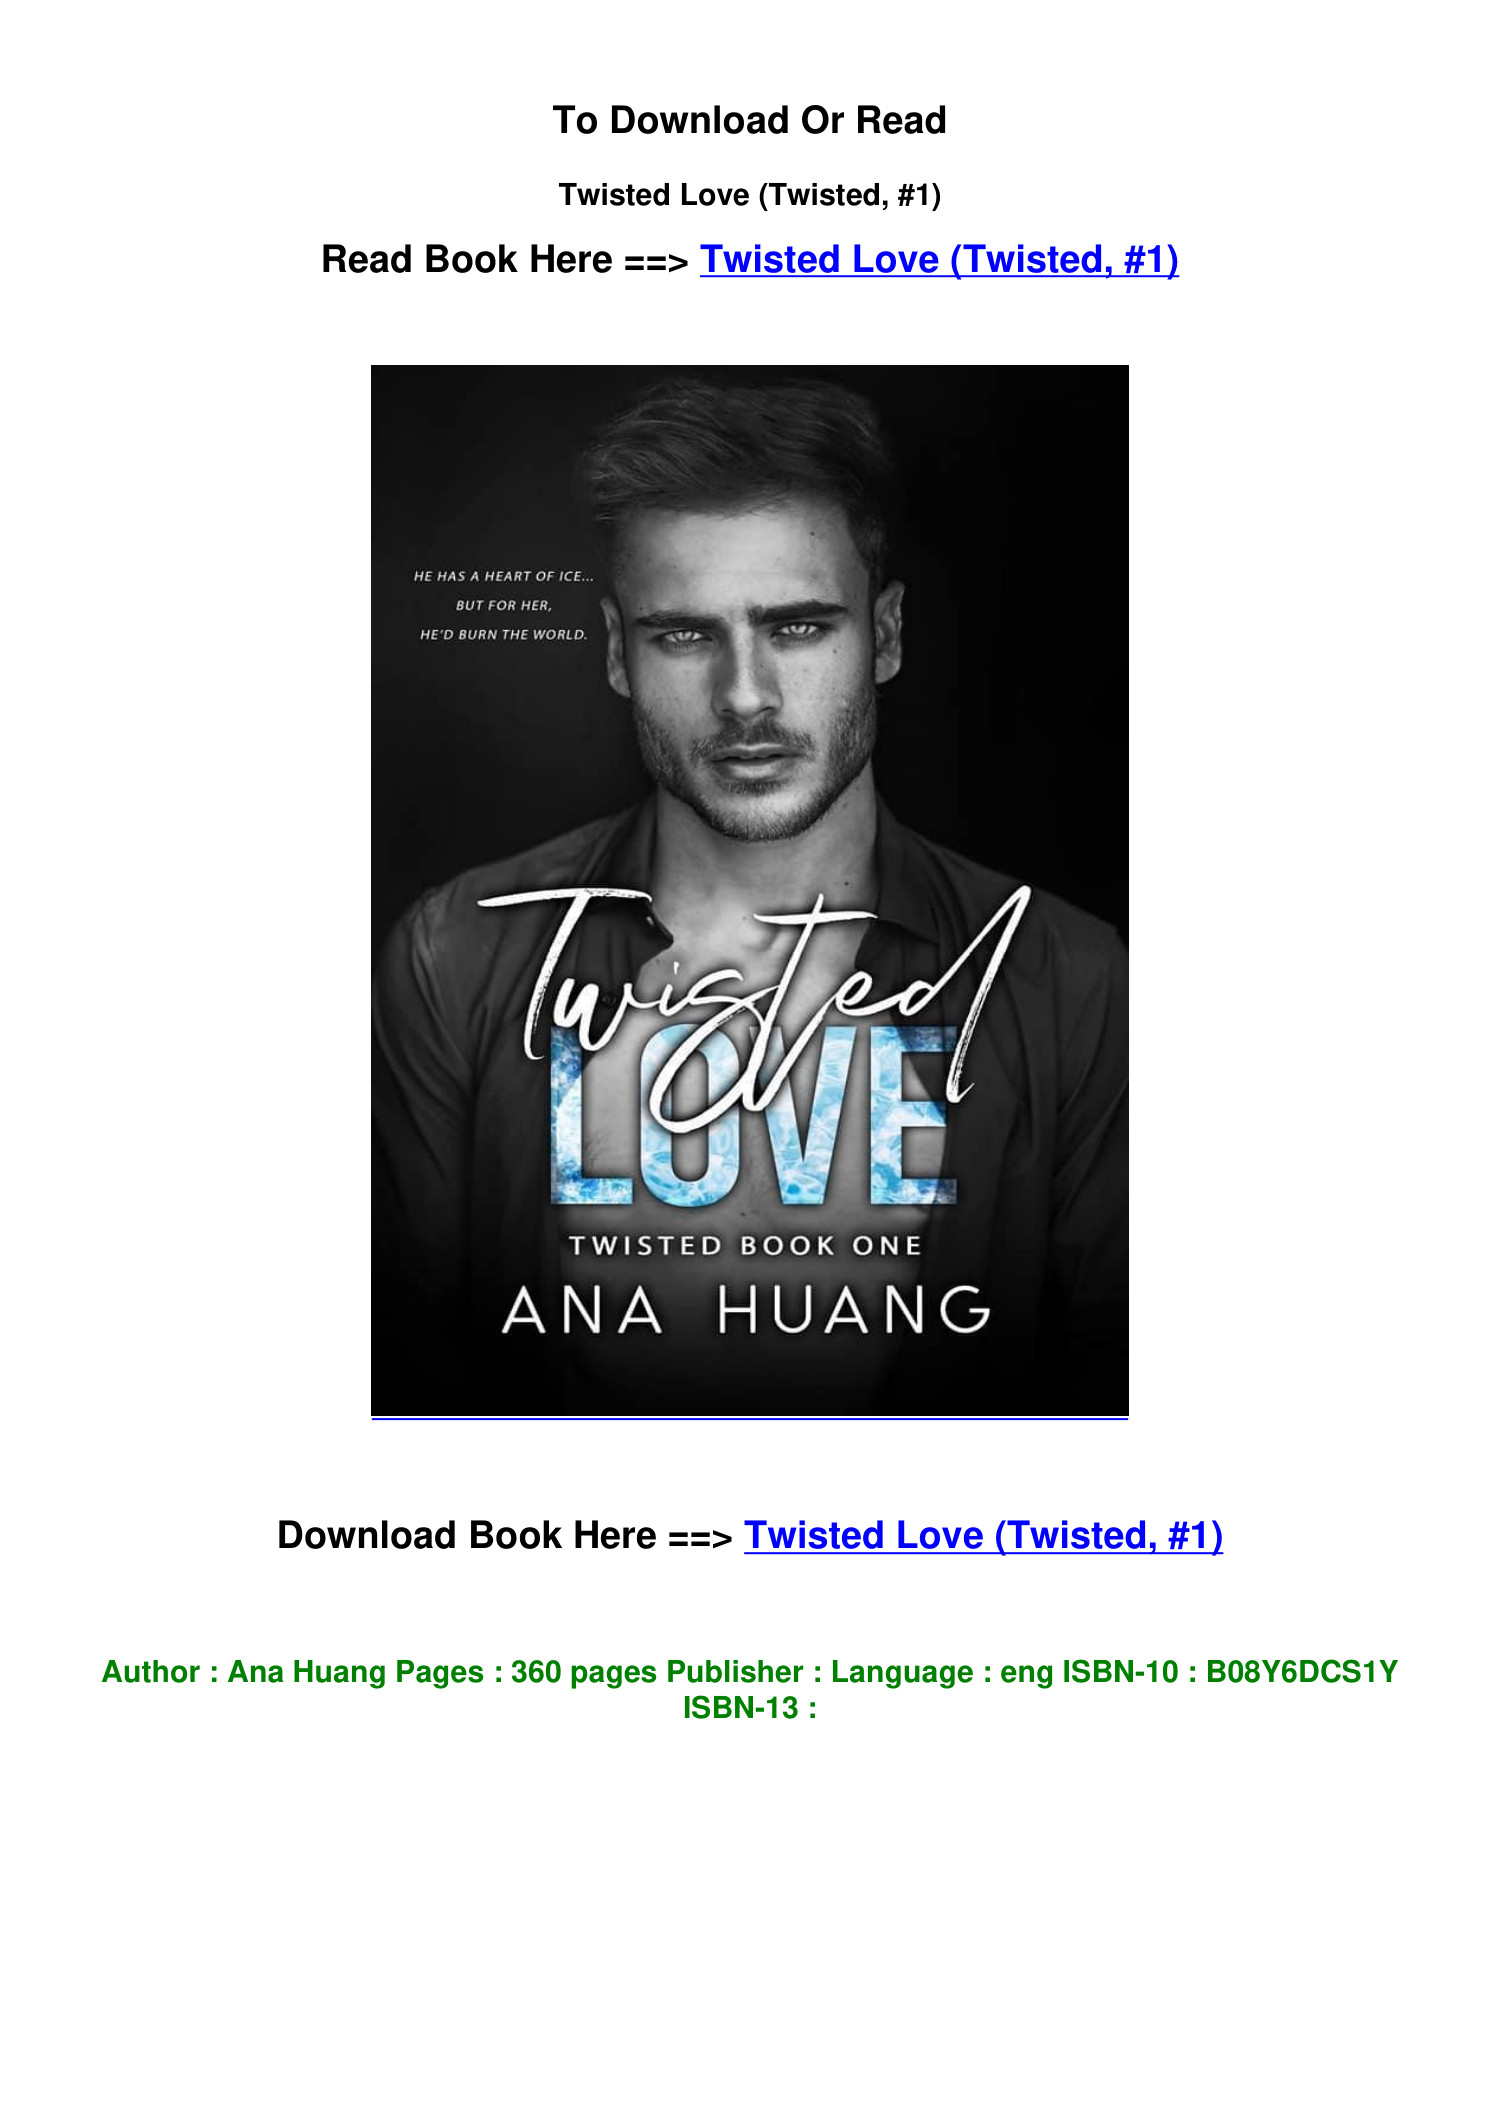 Twisted Love (Twisted Book One) (PDF) - 1.75 MB @ PDF Room